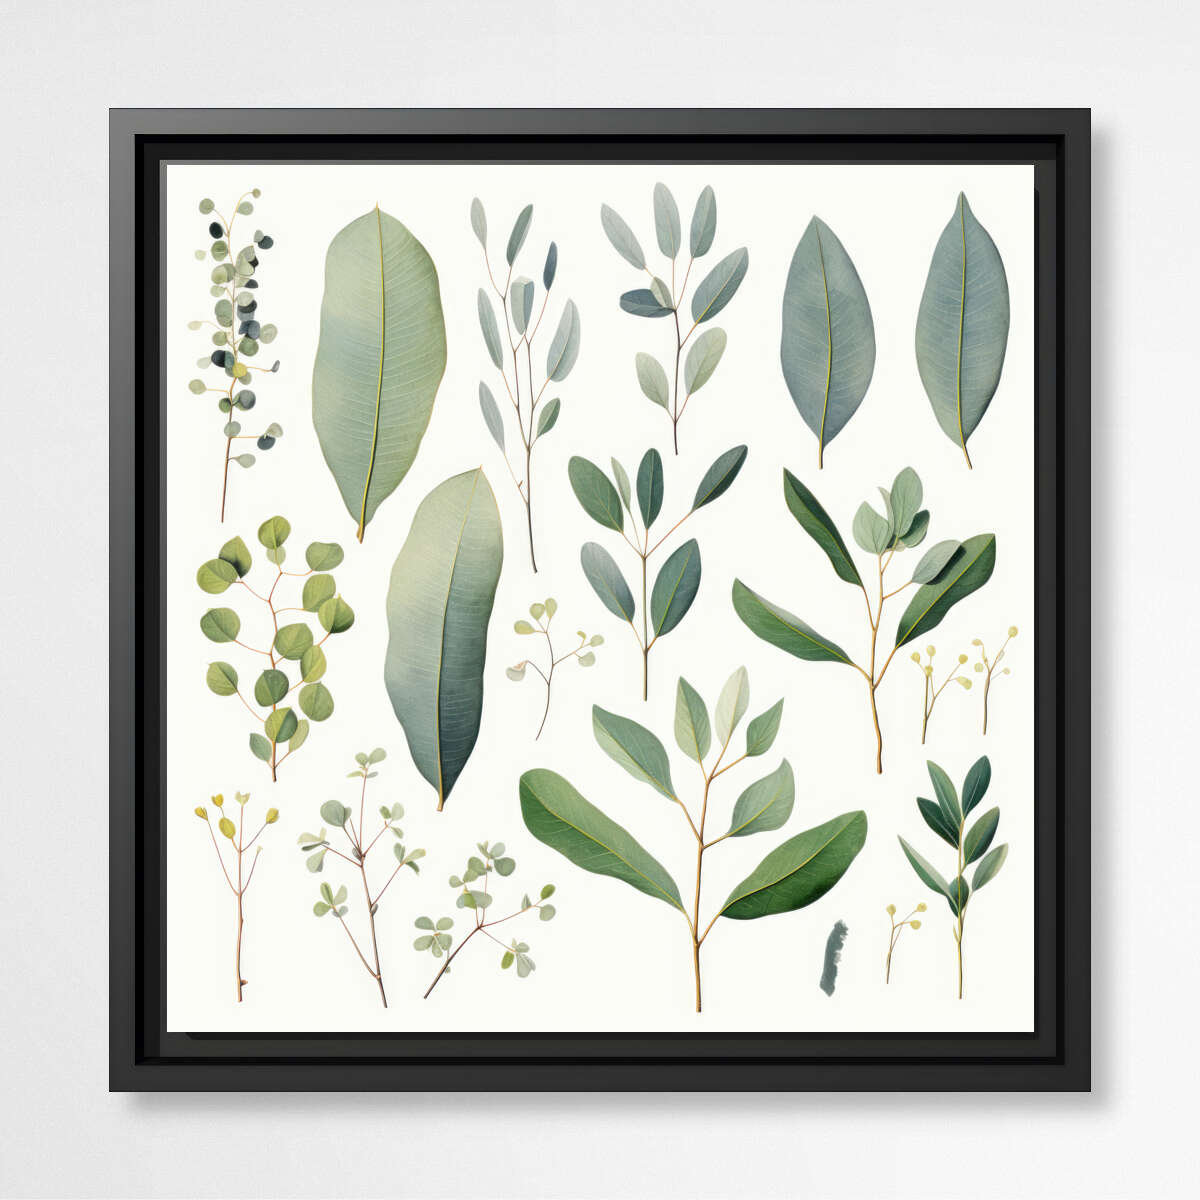 Botanical Beauty: Assortment of Eucalyptus Leaves | Australiana Wall Art Prints - The Canvas Hive